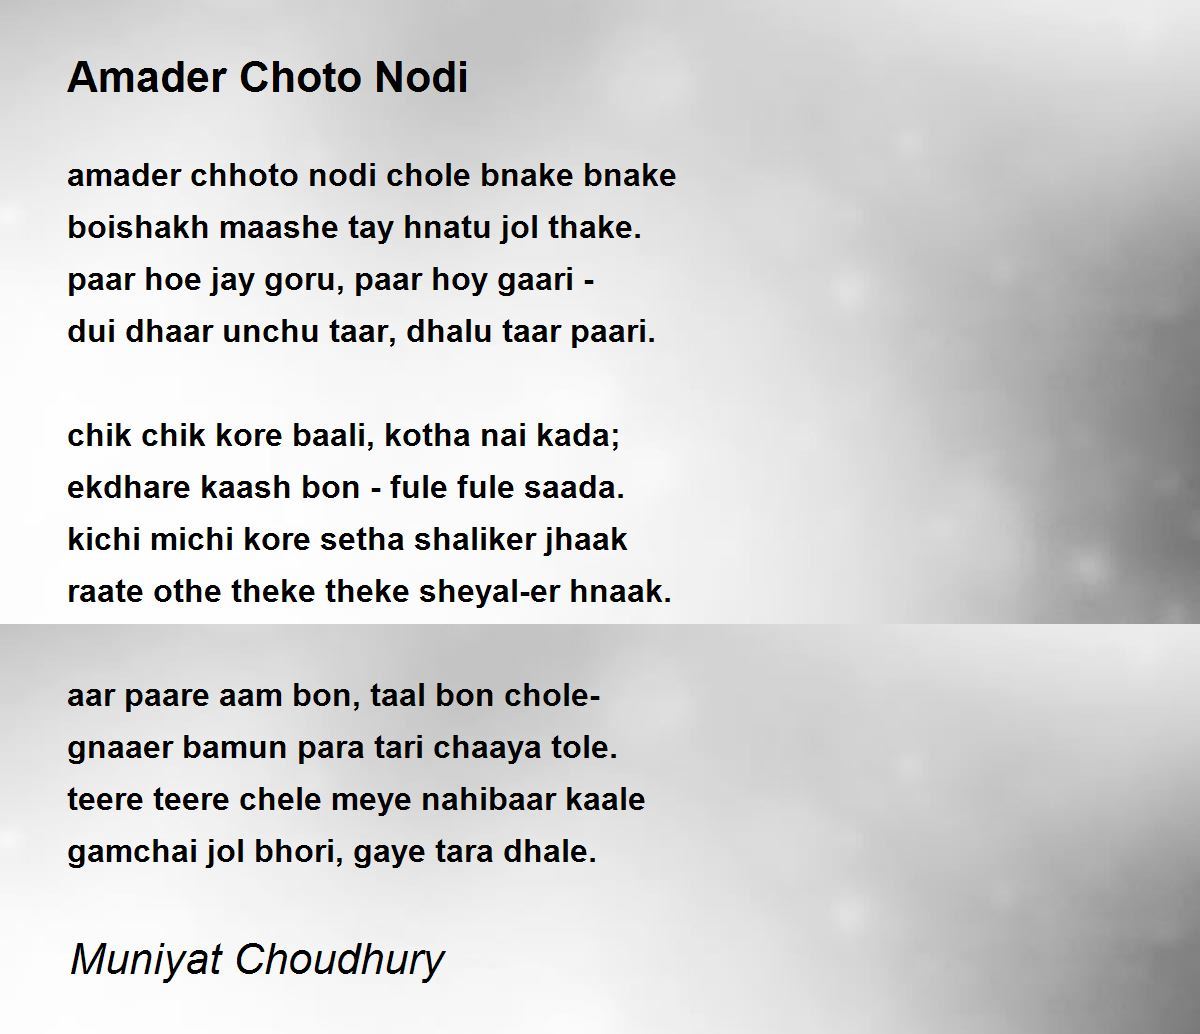 Amader choto nodi lyrics